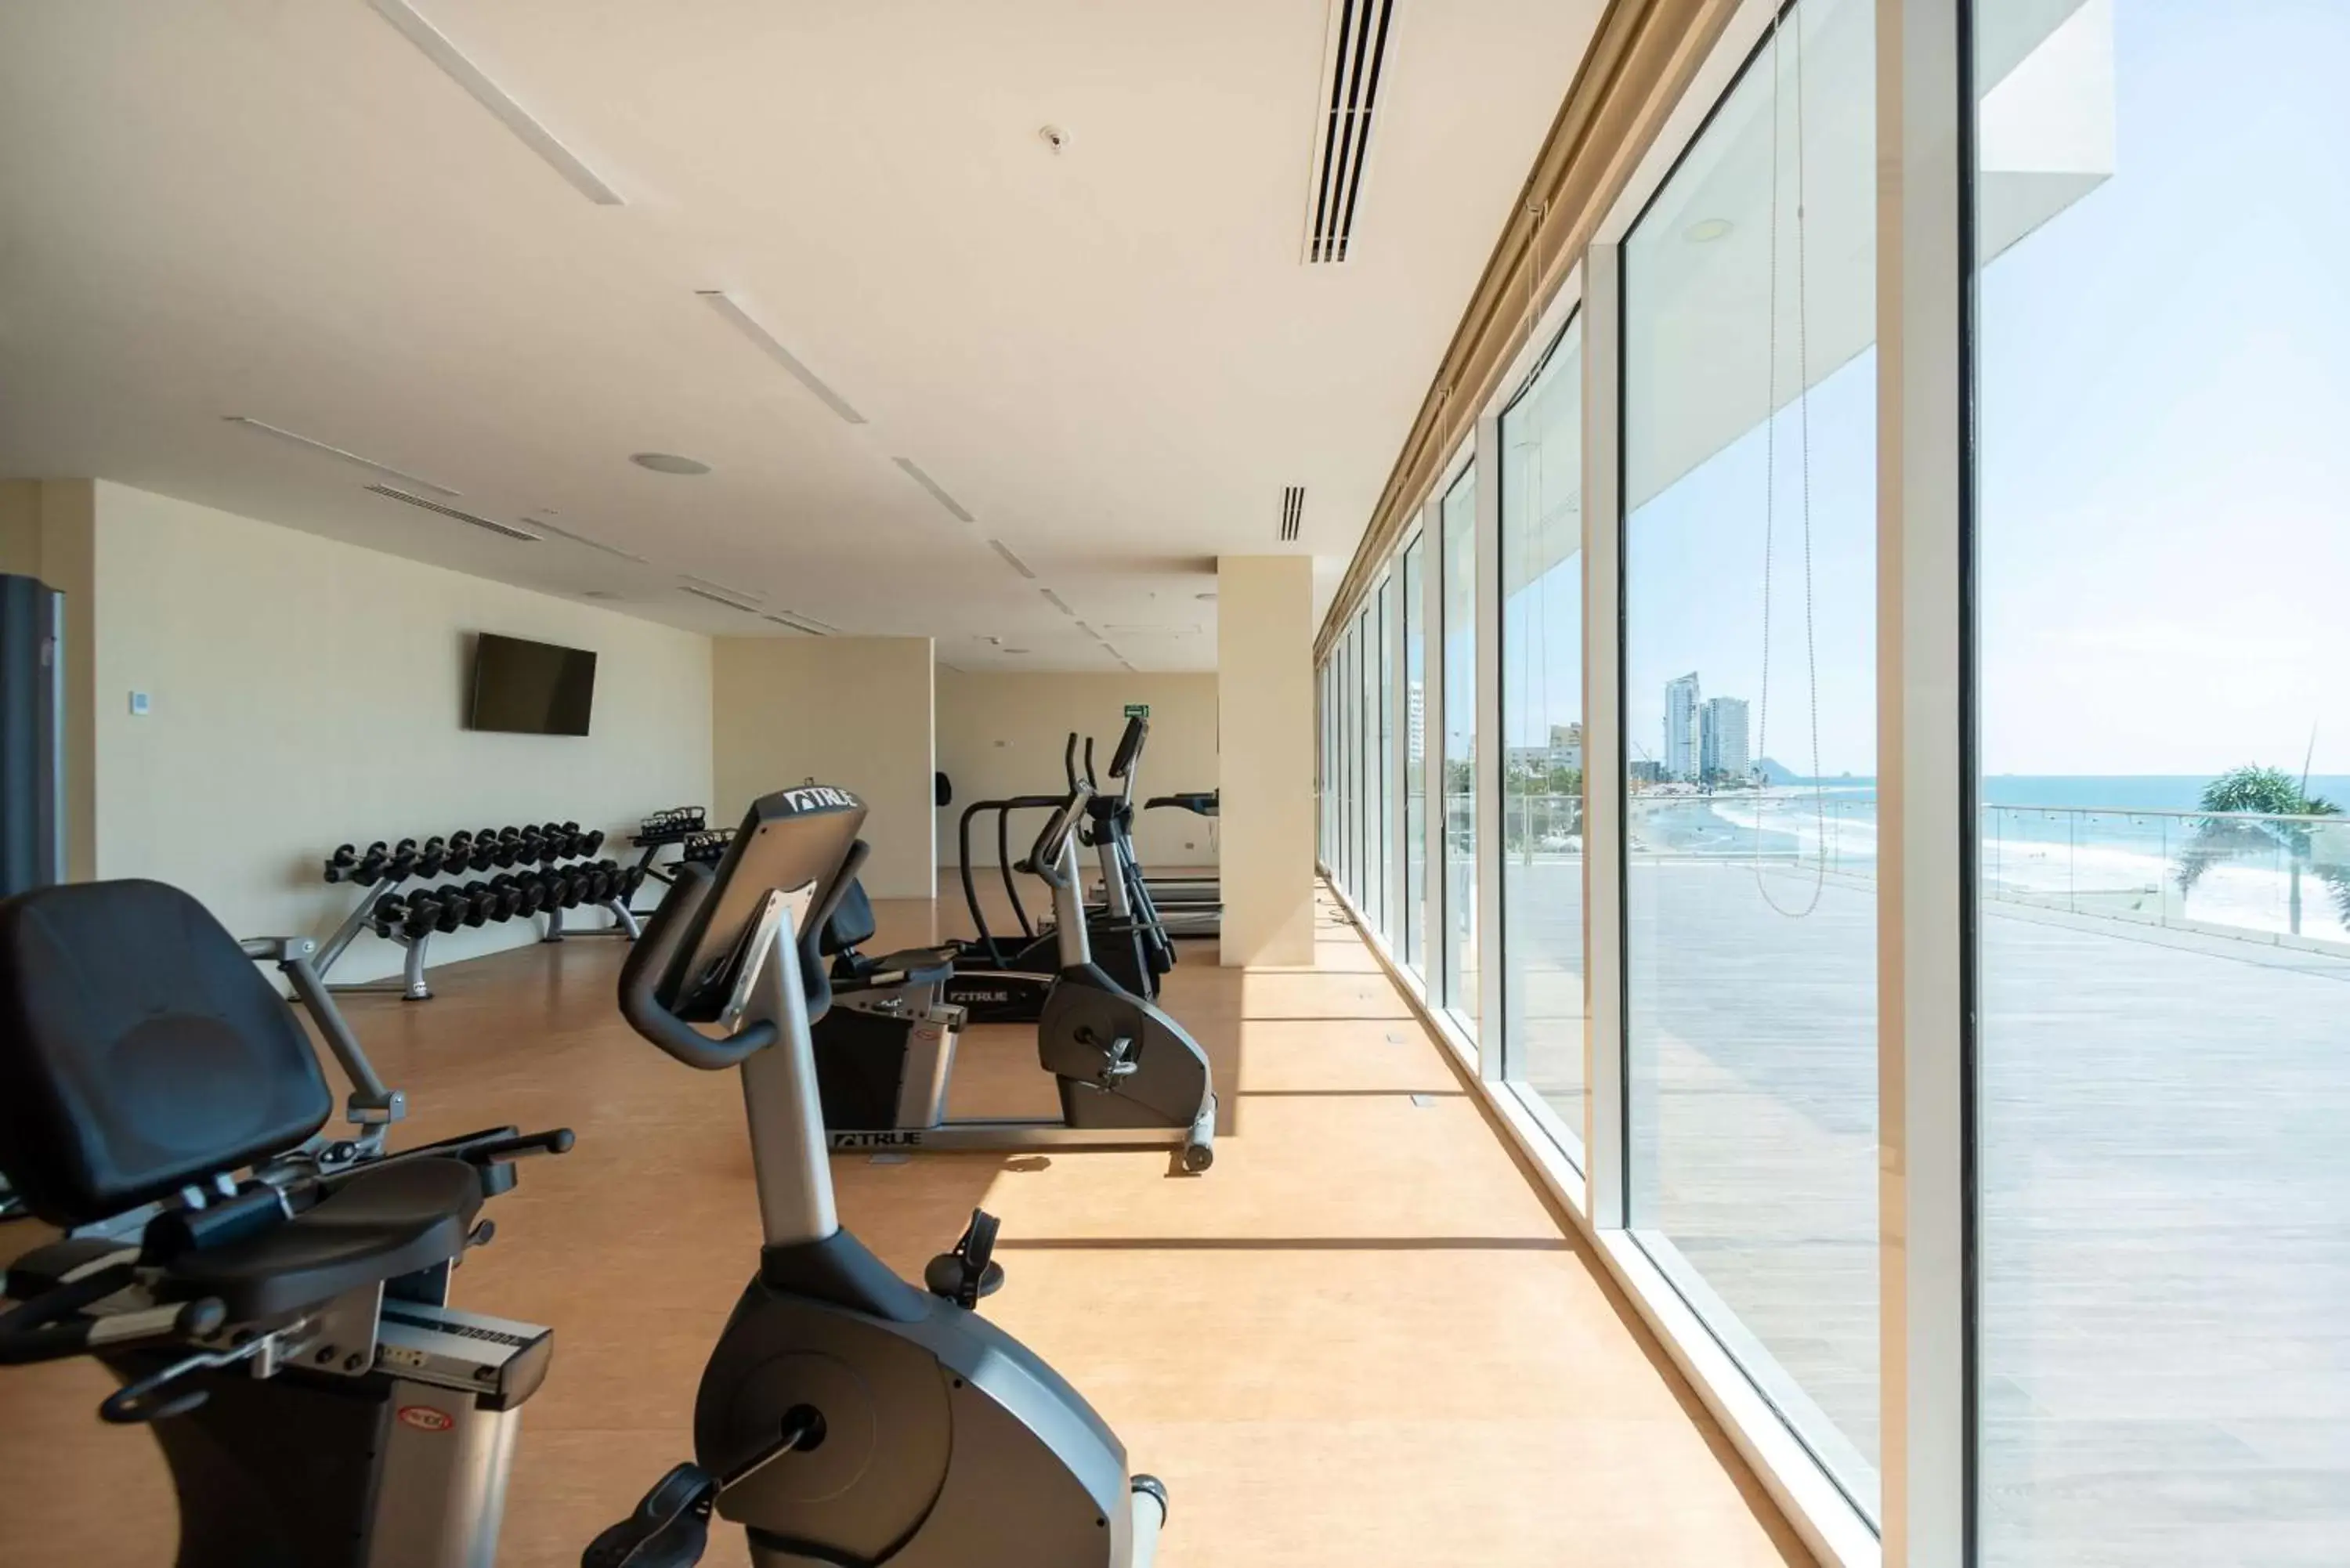 Fitness centre/facilities, Fitness Center/Facilities in DoubleTree by Hilton Mazatlan, SIN